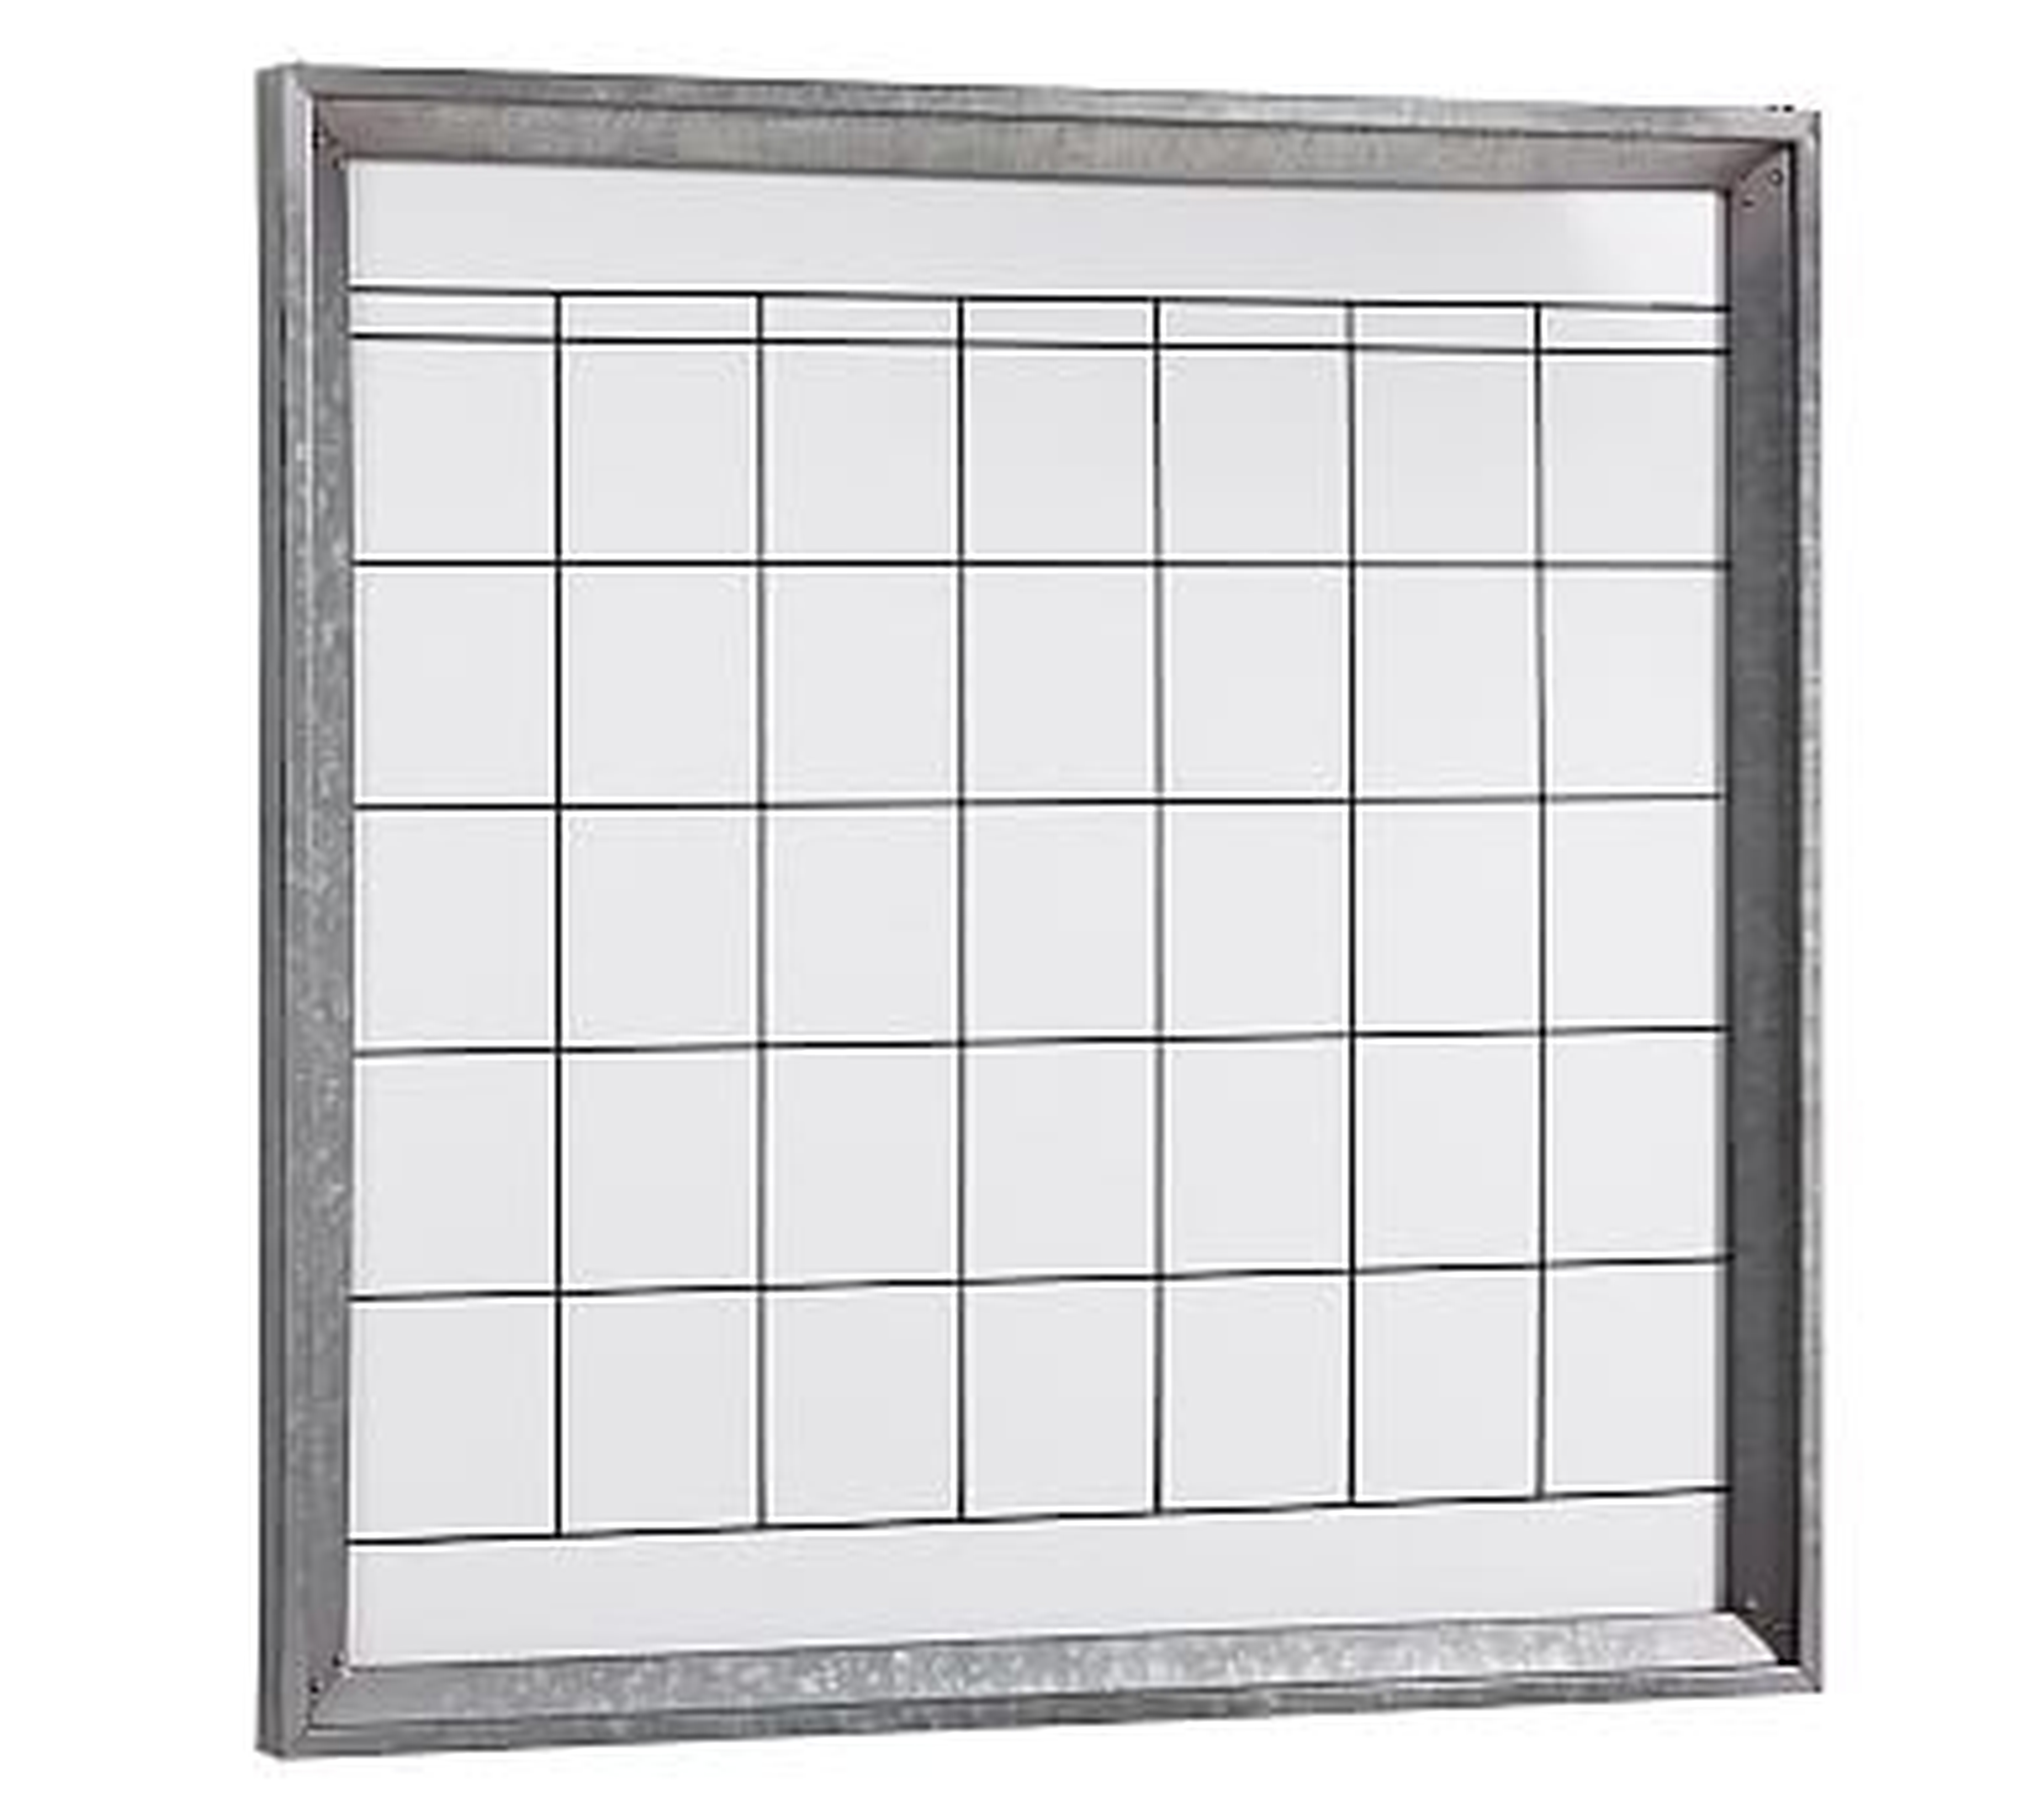 Galvanized Modular Wall System - White Board Calendar - Pottery Barn